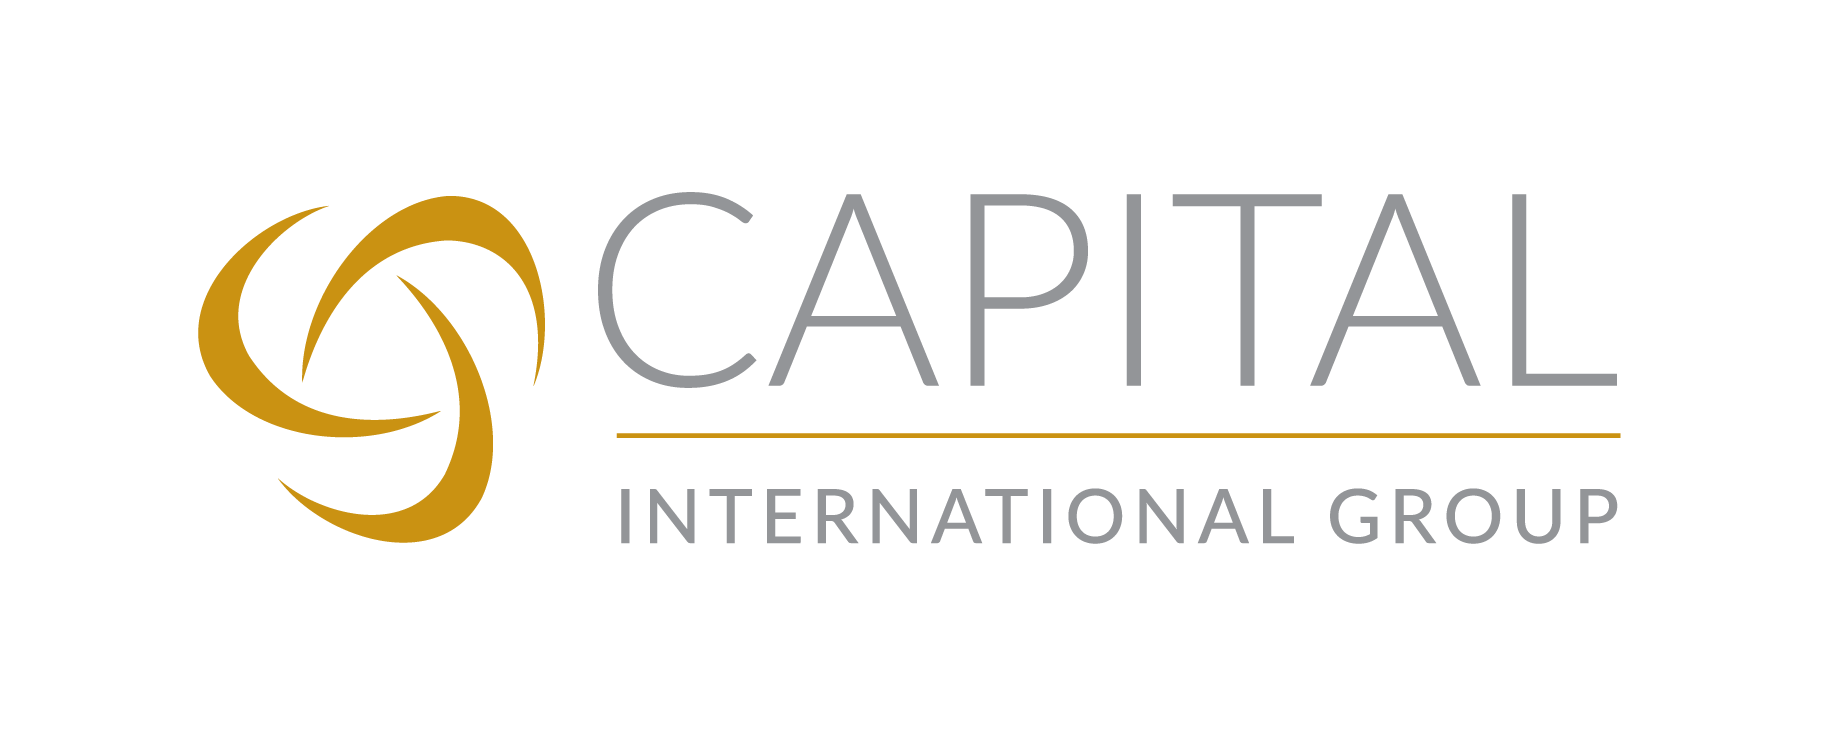 capital international group